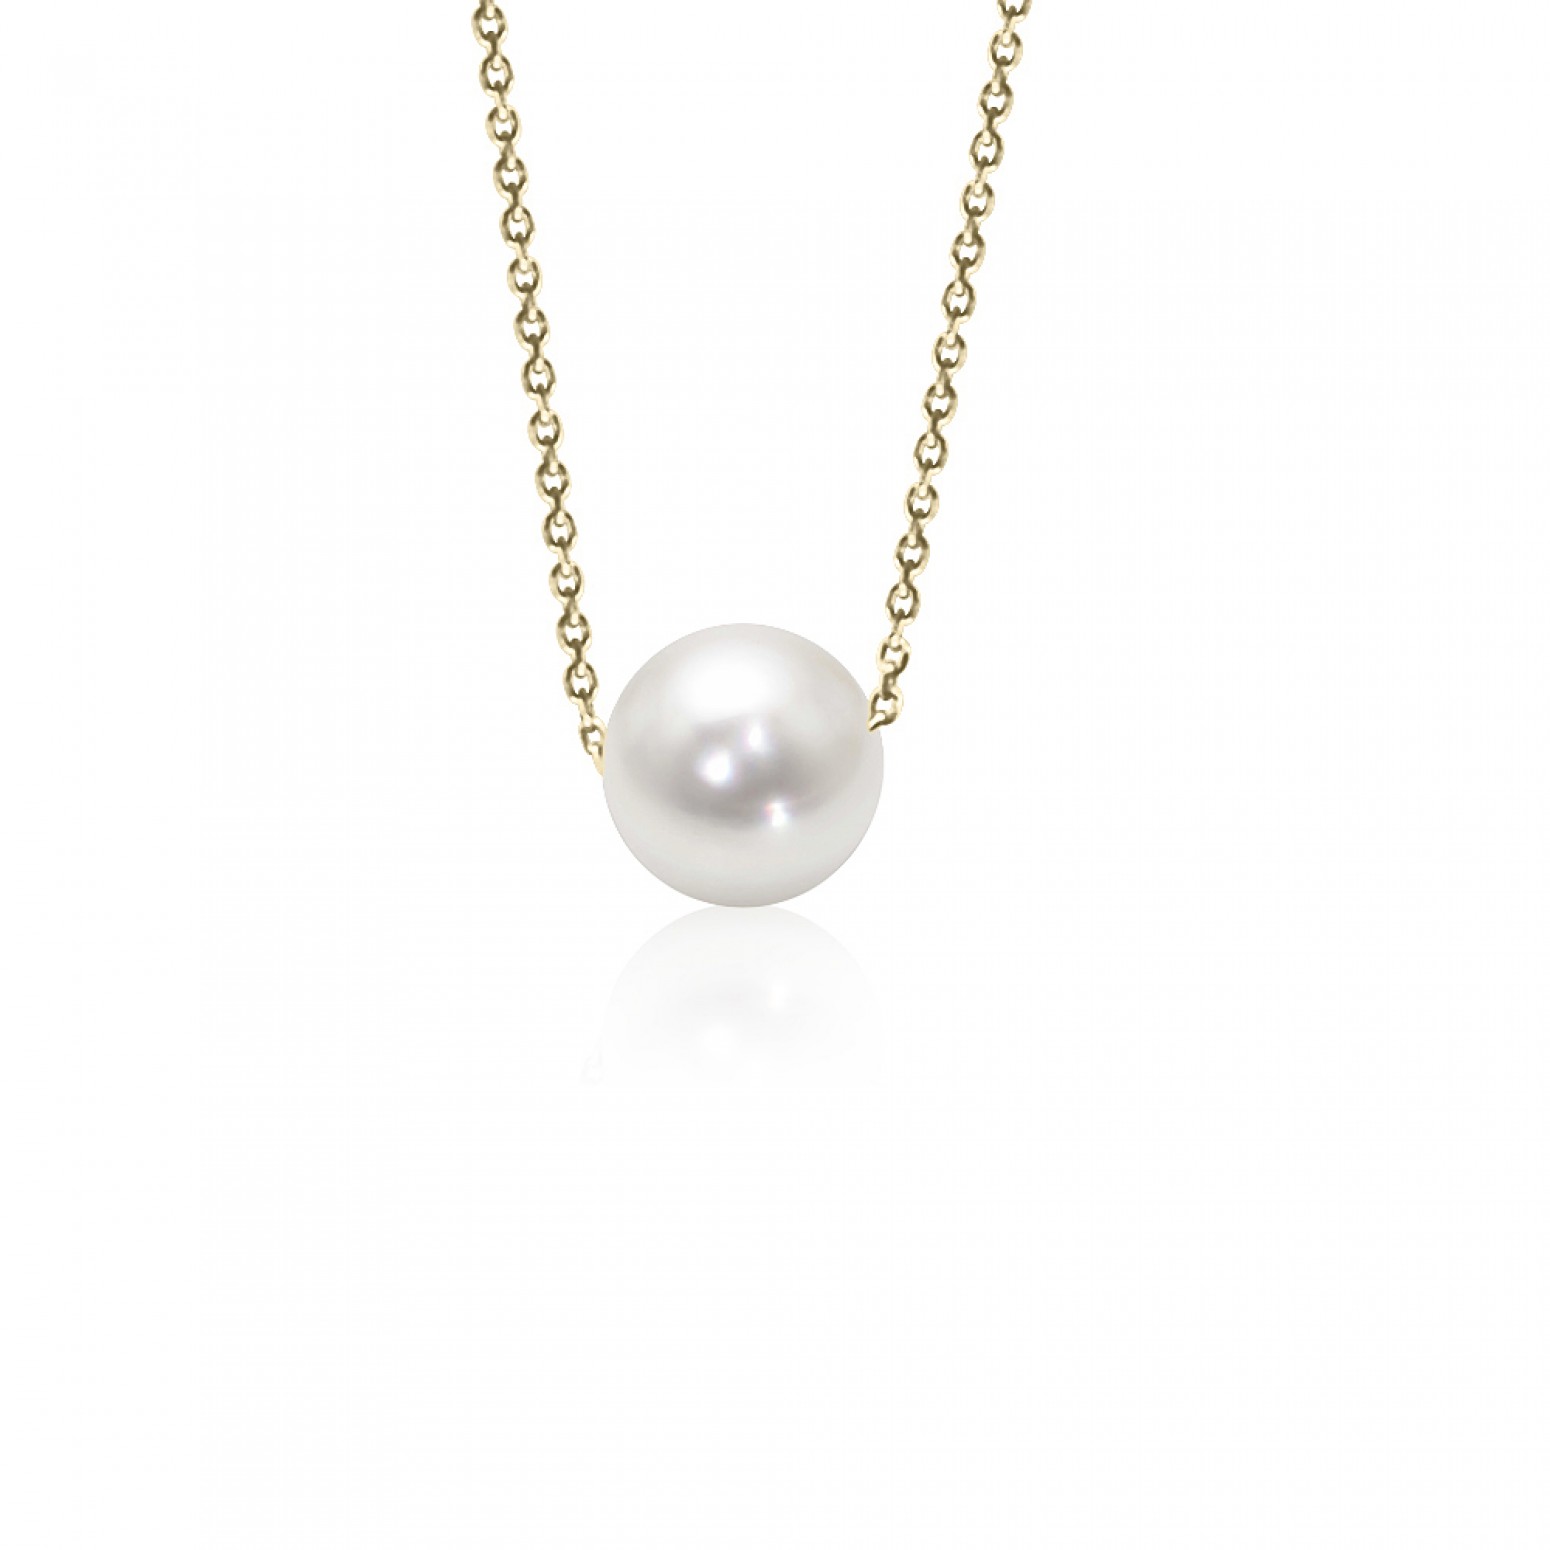 Necklace, Κ9 gold with pearl, ko4958 NECKLACES Κοσμηματα - chrilia.gr